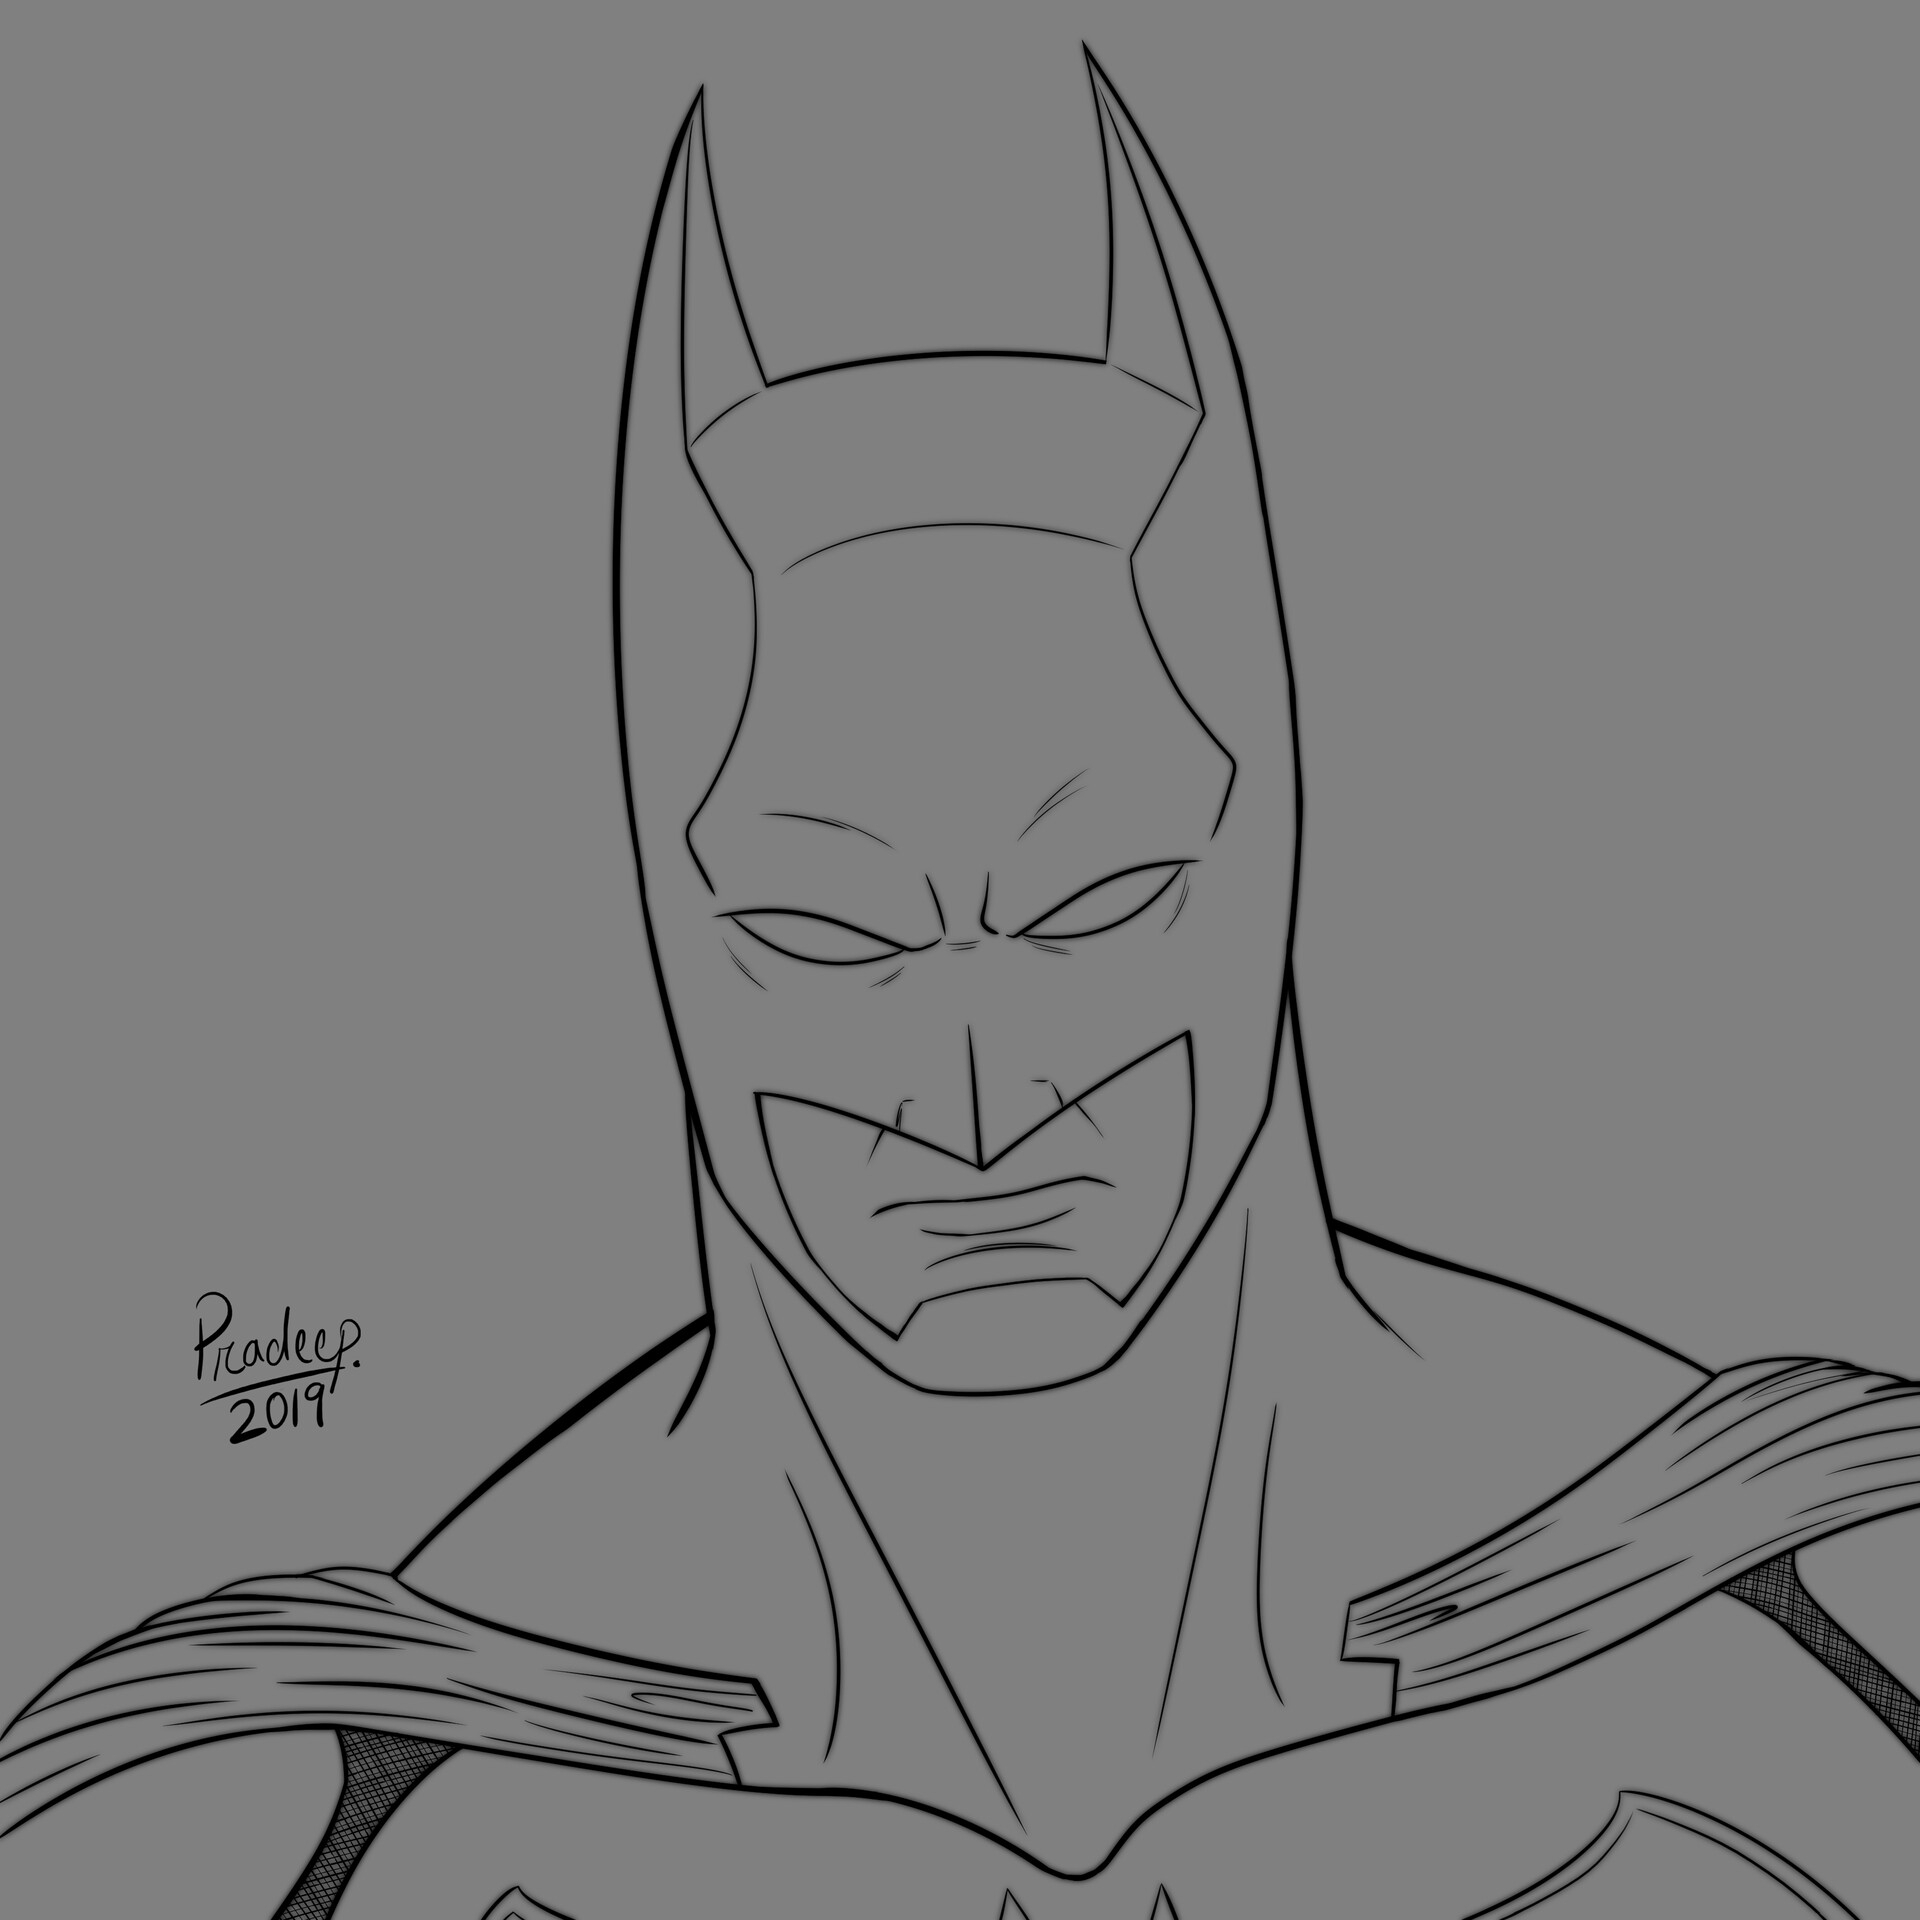 Drew a Batman sketch cover, hope you like : r/batman